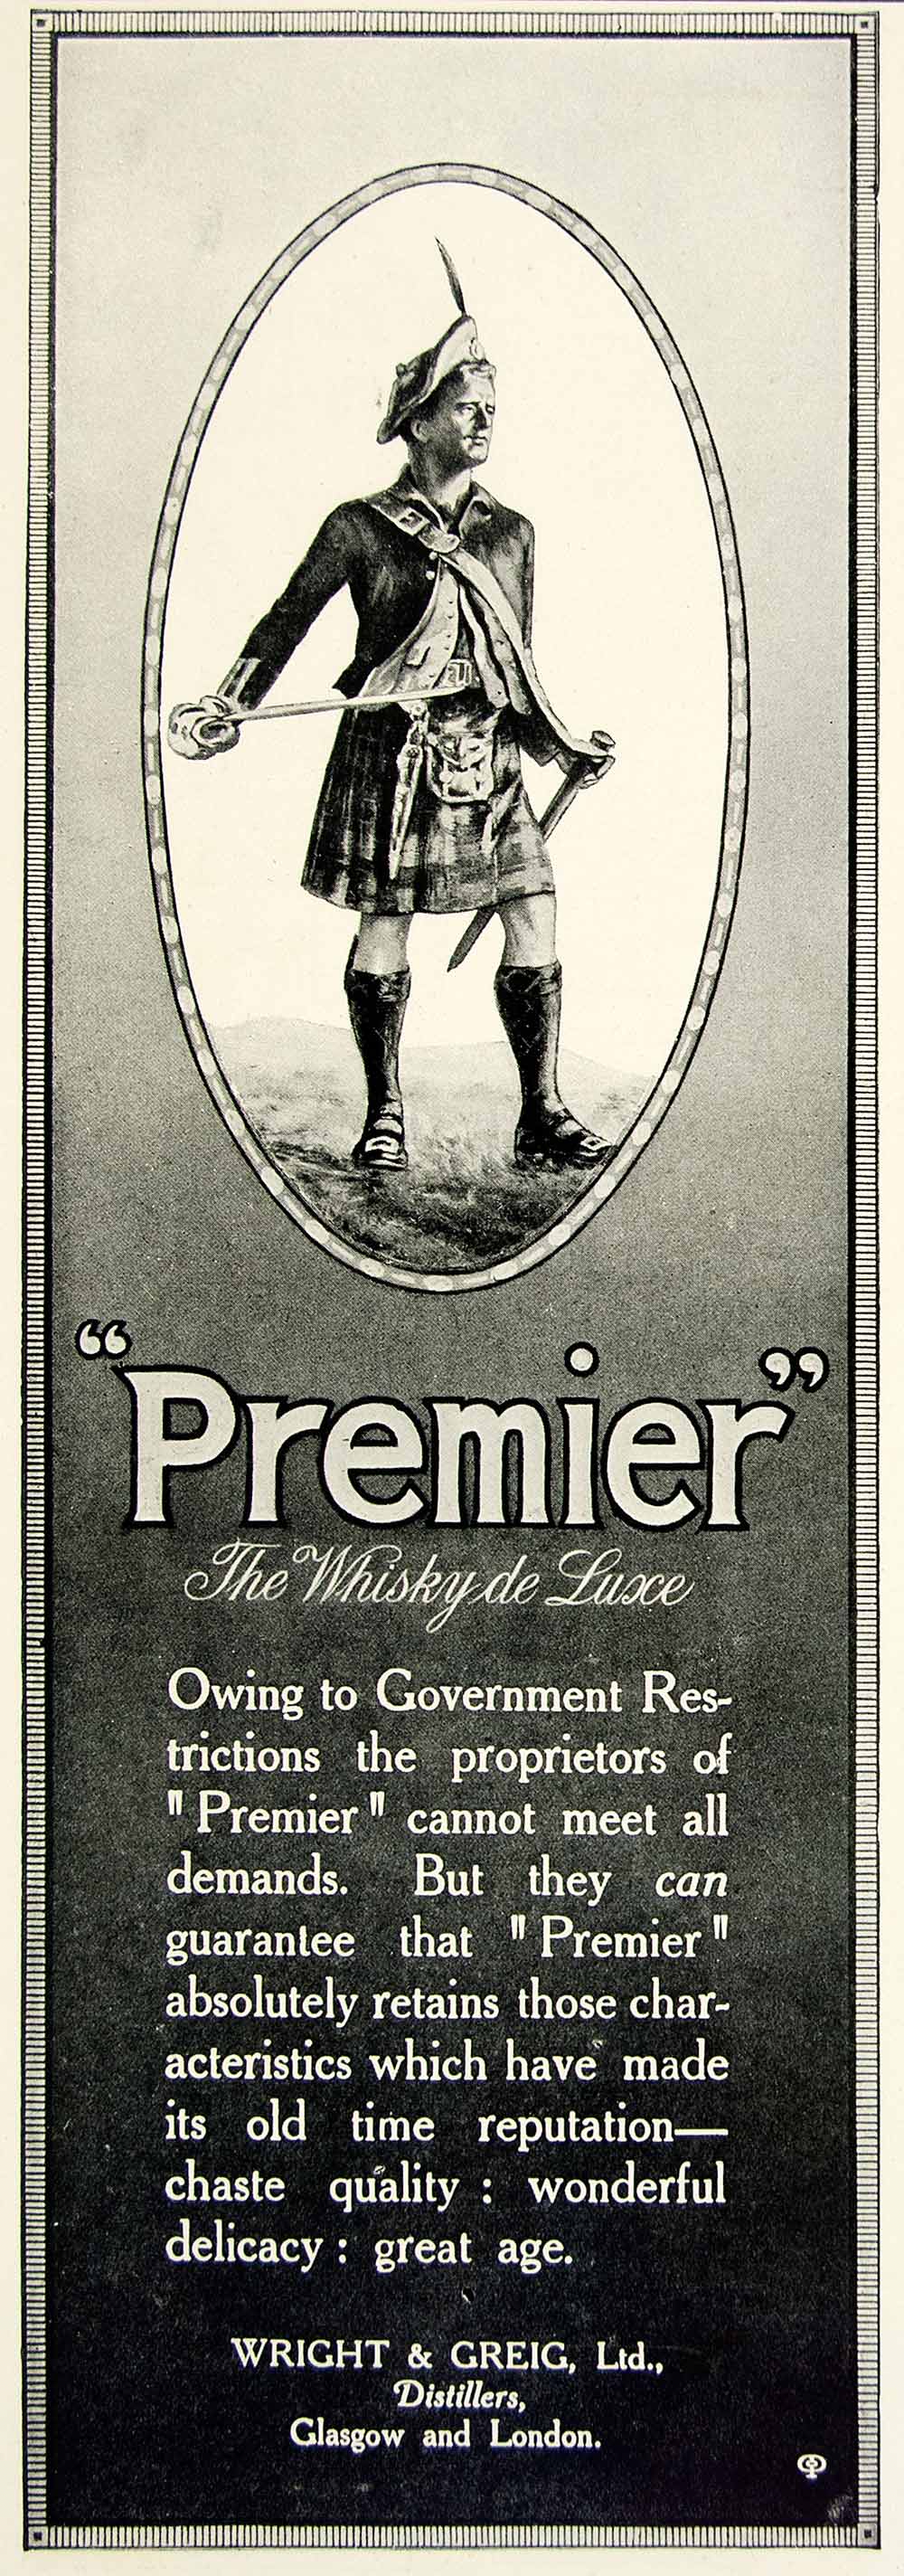 1918 Ad Premier Whisky Luxe Wright Greig Glasgow London Distillery Portrait YTT1